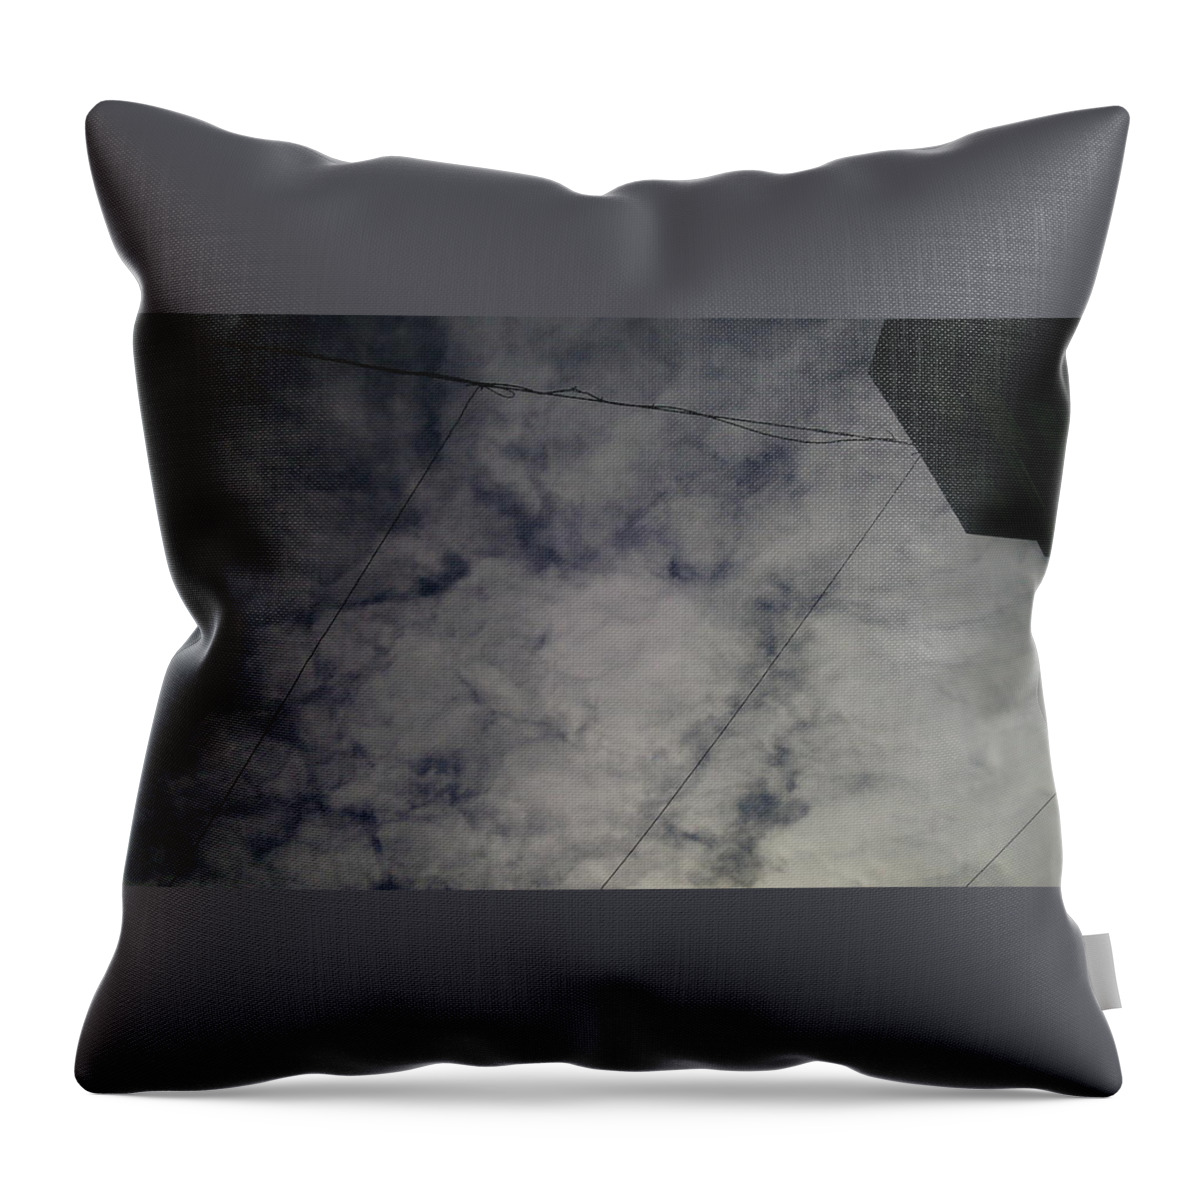 Clouds Throw Pillow featuring the photograph Inverted Belgrade by Anamarija Marinovic